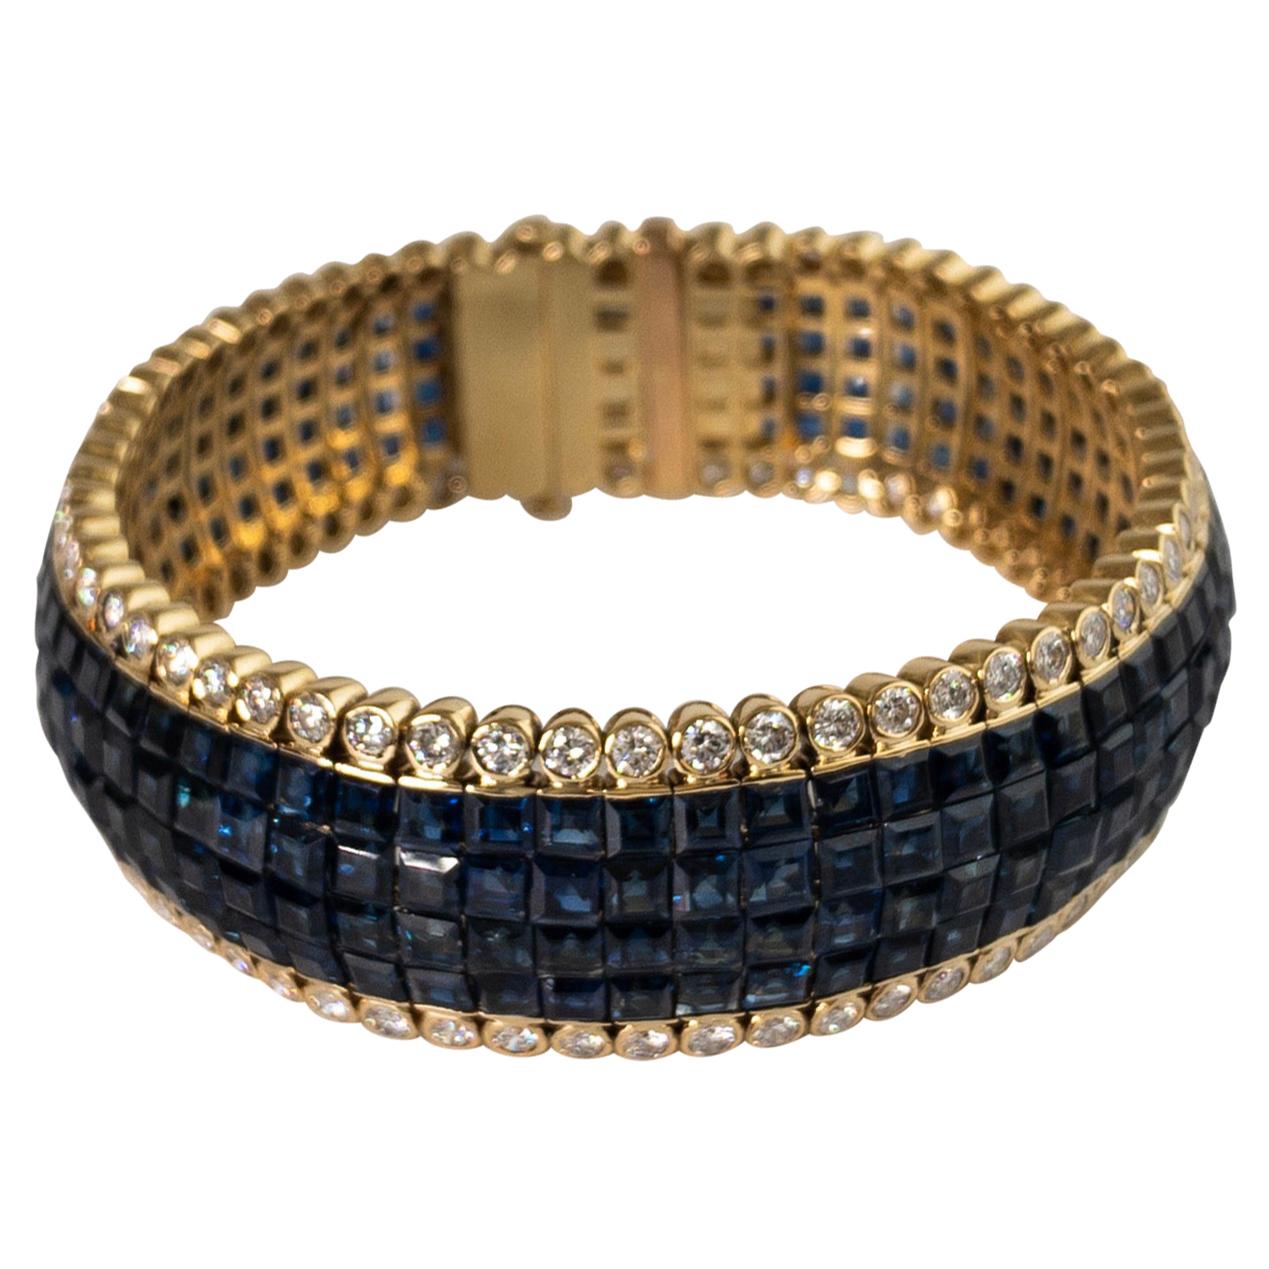 39.62 Carat Blue Sapphire and 6.2 Carat Diamond Bracelet in 18 Karat Yellow Gold